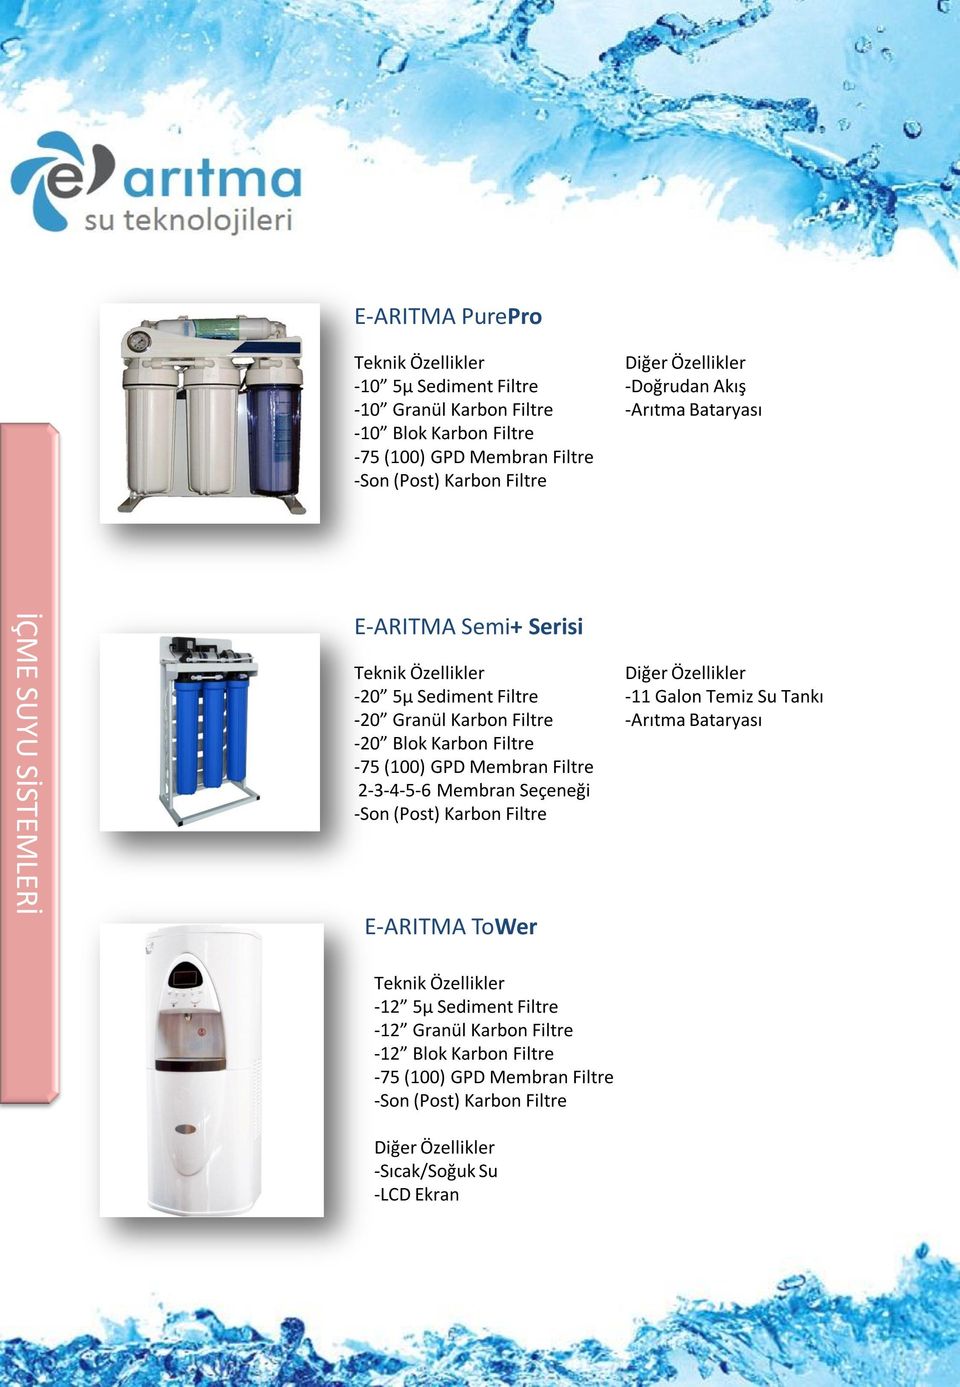 Filtre -75 (100) GPD Membran Filtre 2-3-4-5-6 Membran Seçeneği -Son (Post) Karbon Filtre E-ARITMA ToWer Diğer Özellikler -11 Galon Temiz Su Tankı -Arıtma Bataryası Teknik